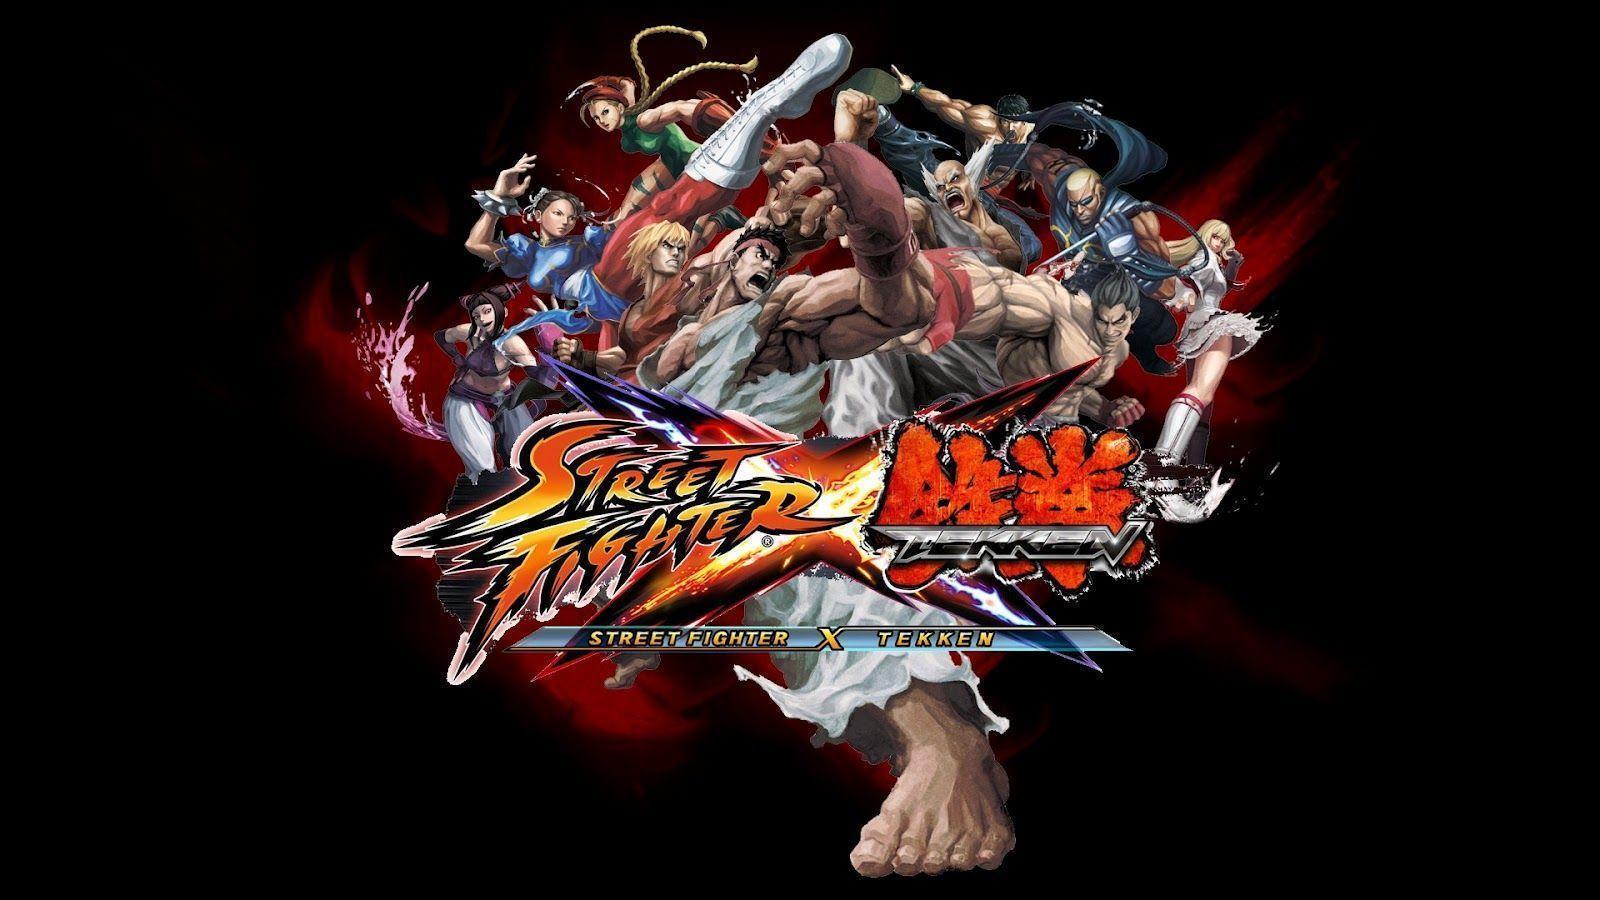 Street Fighter X Tekken Wallpaper HD Image & Picture